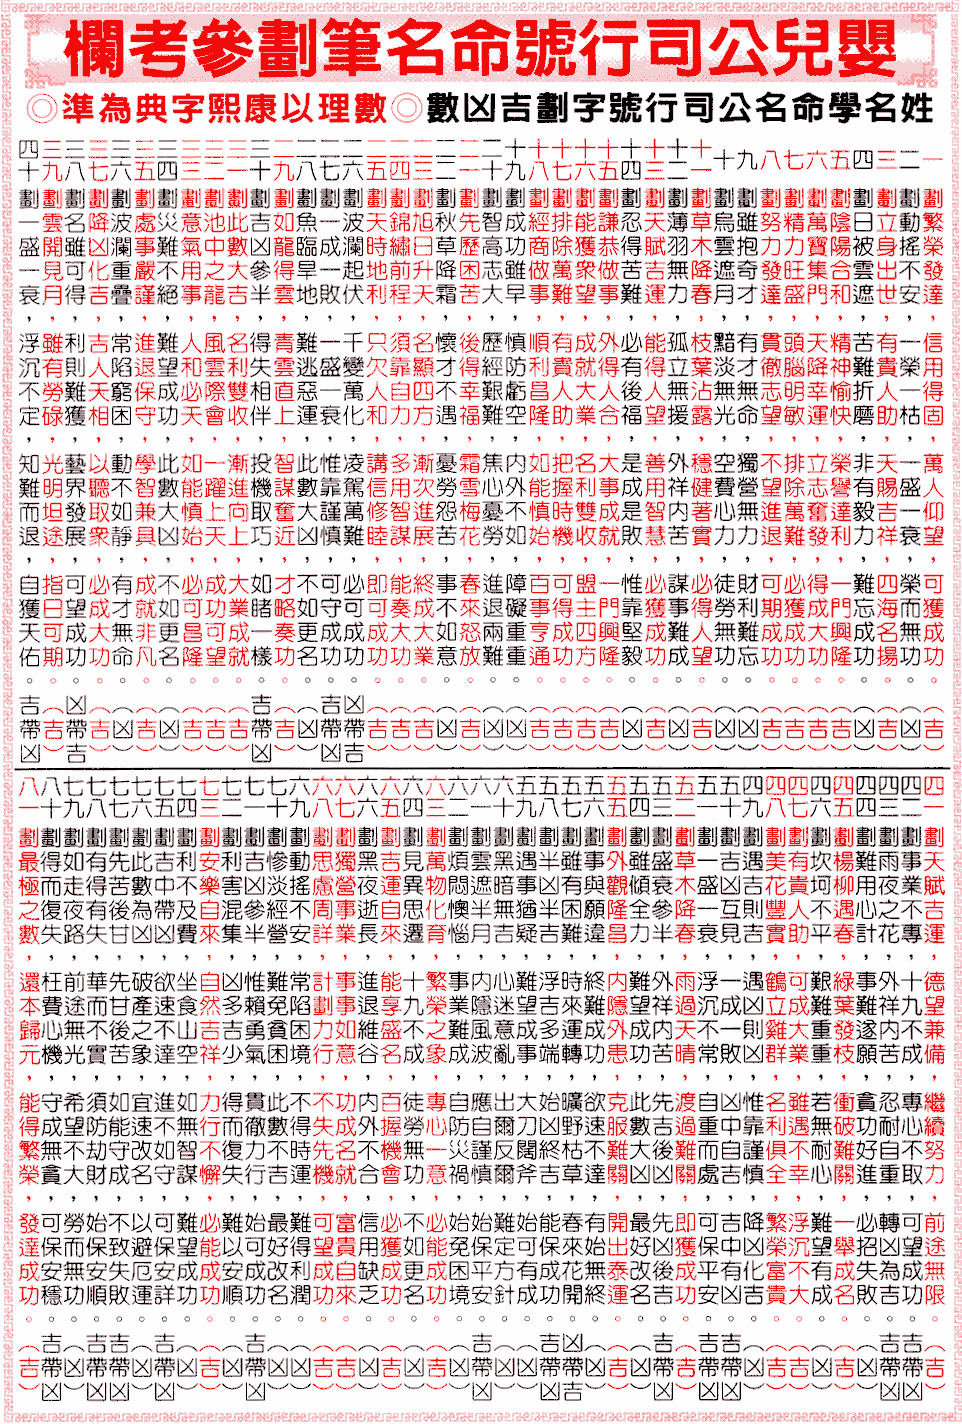 Chinese Word Chart